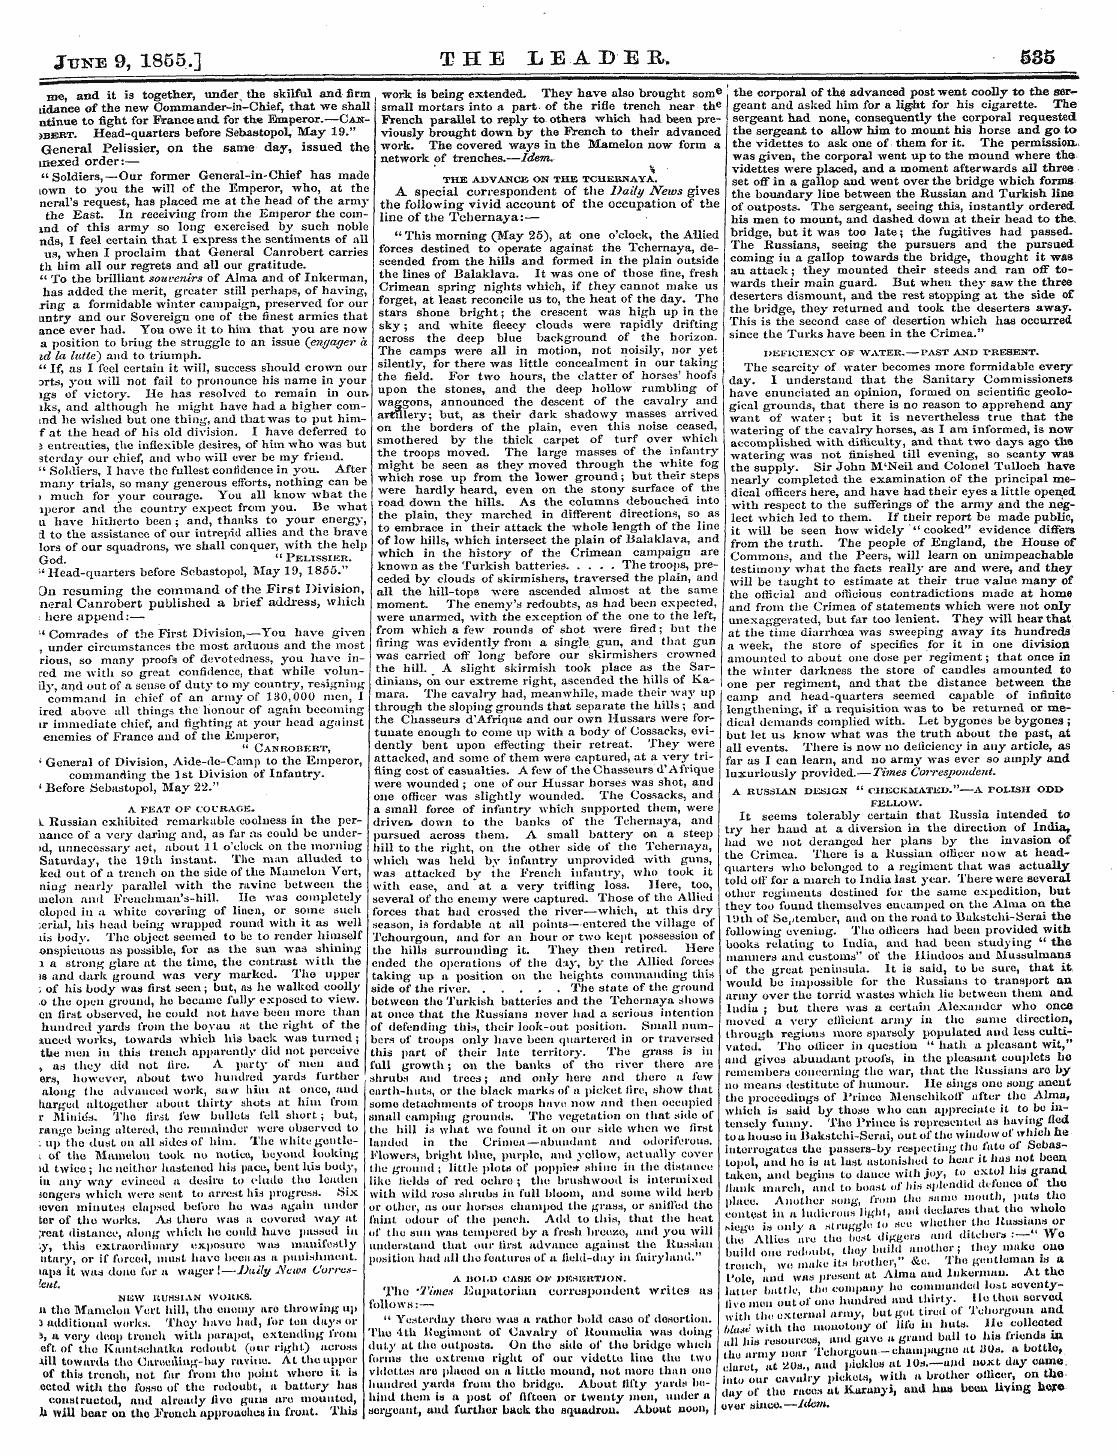 Leader (1850-1860): jS F Y, 2nd edition - June 9, 1855.] The Leader. 535